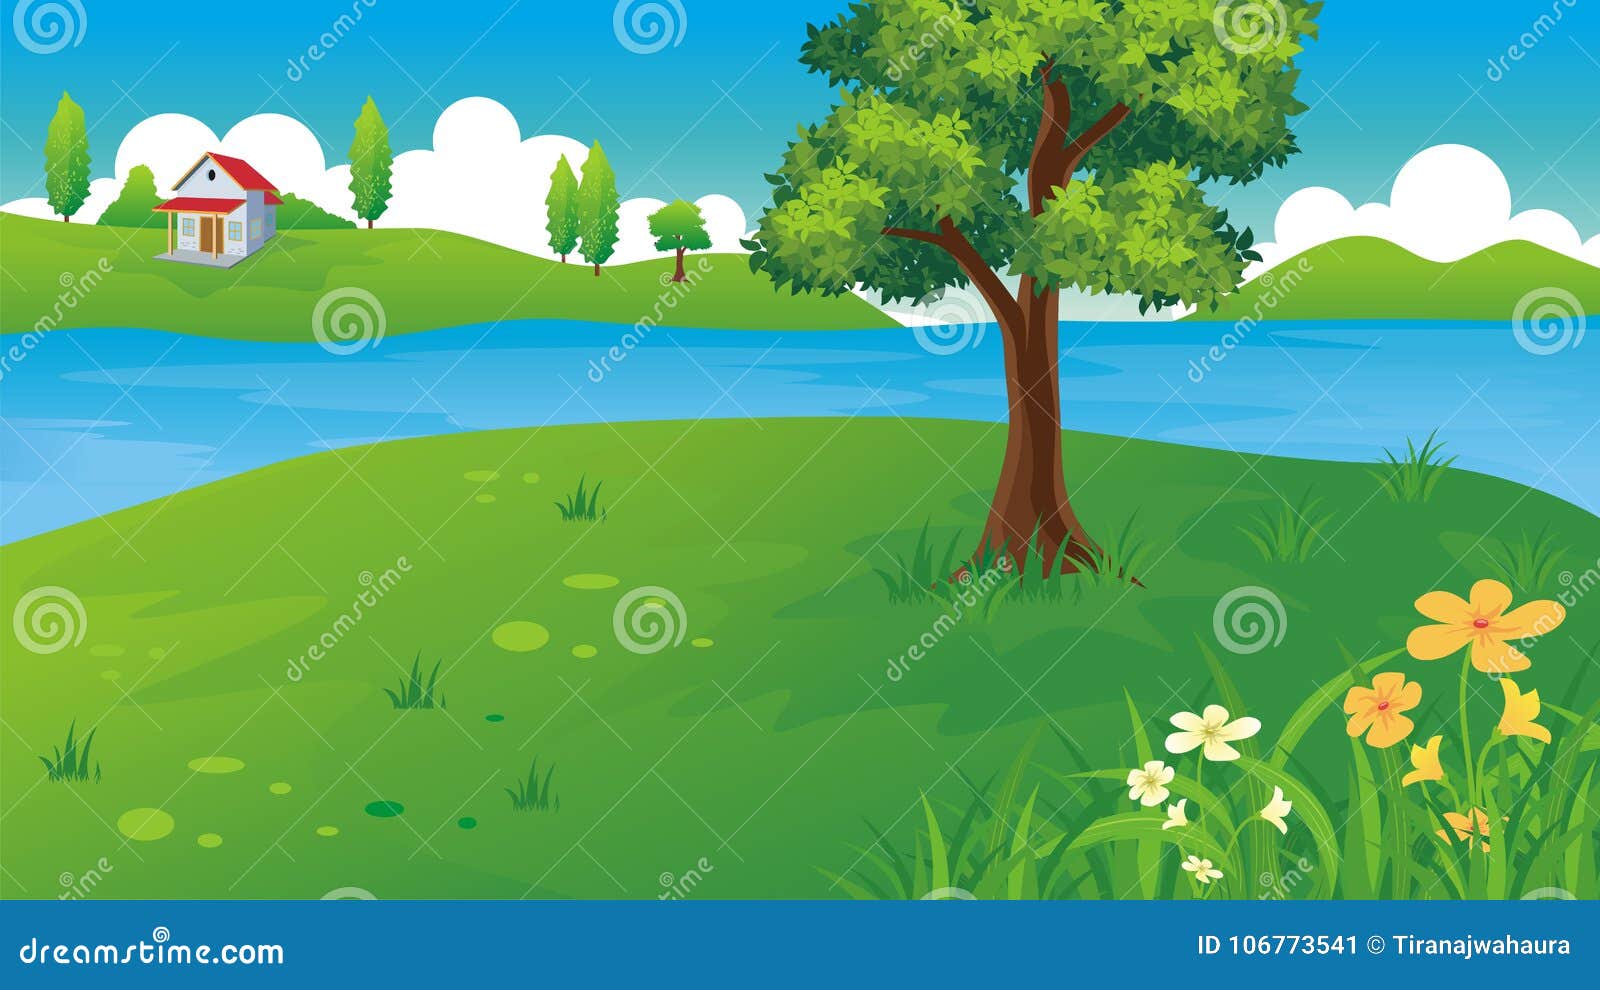 Cartoon Nature Landscape with Beautiful Scene Stock Vector